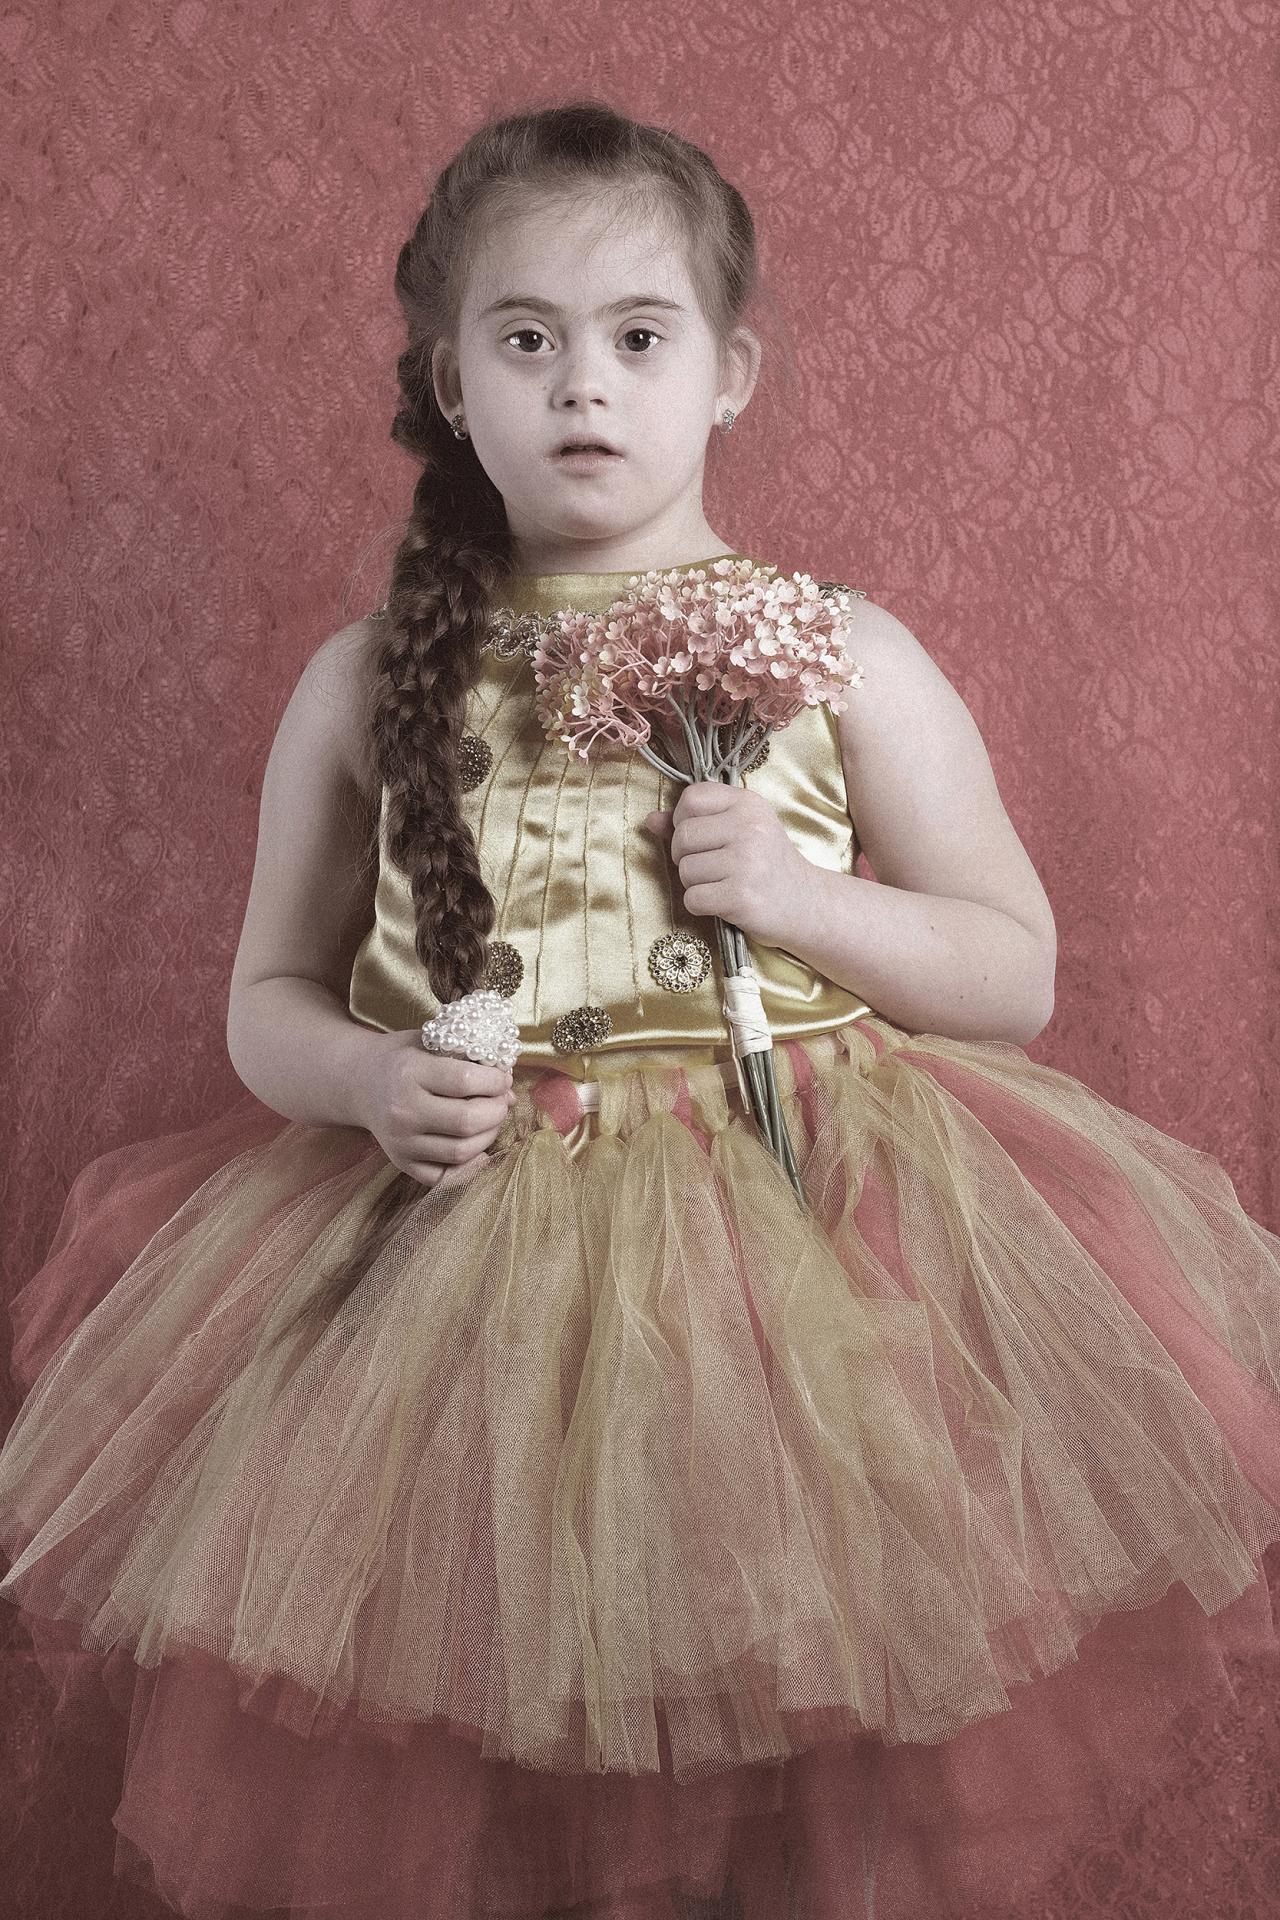 European Photography Awards Winner - Sunny child.